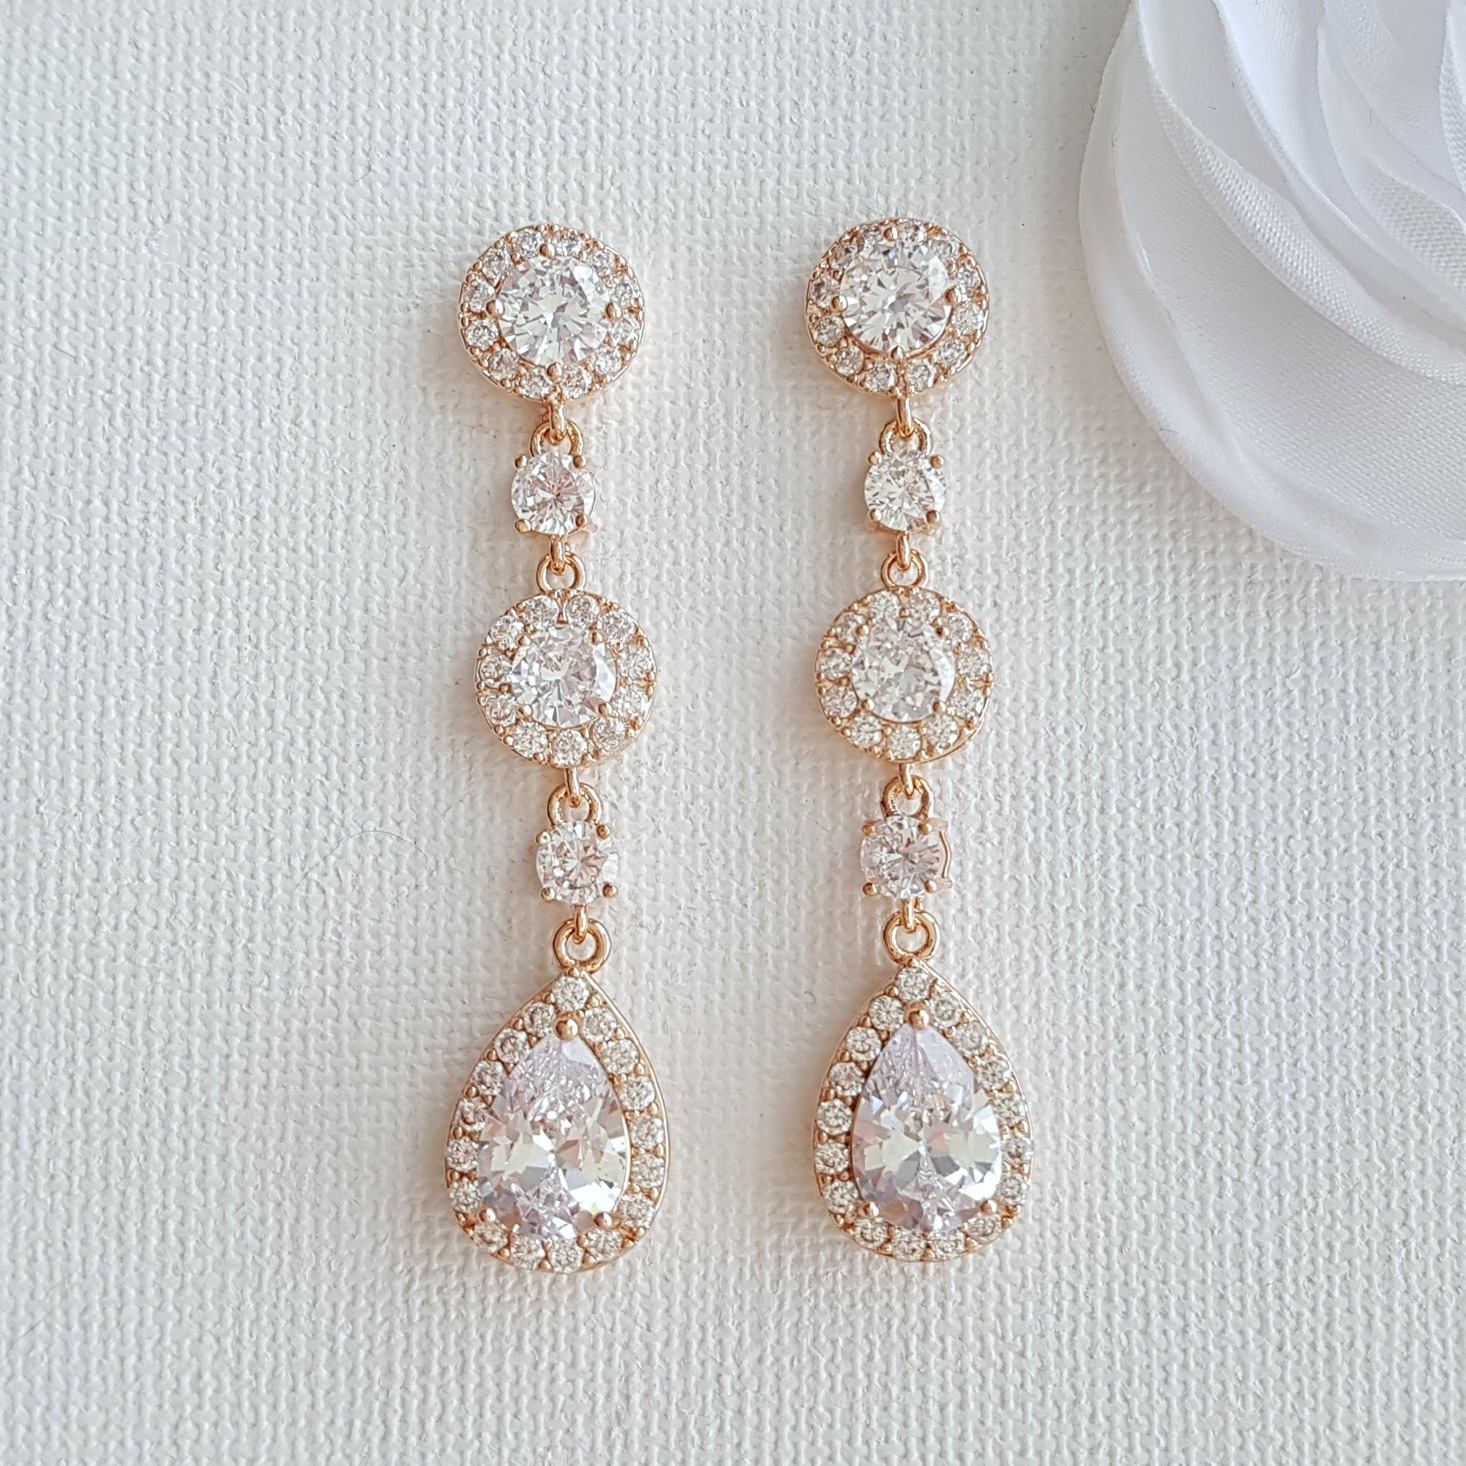 Clip On Bridal Earrings in Rose gold